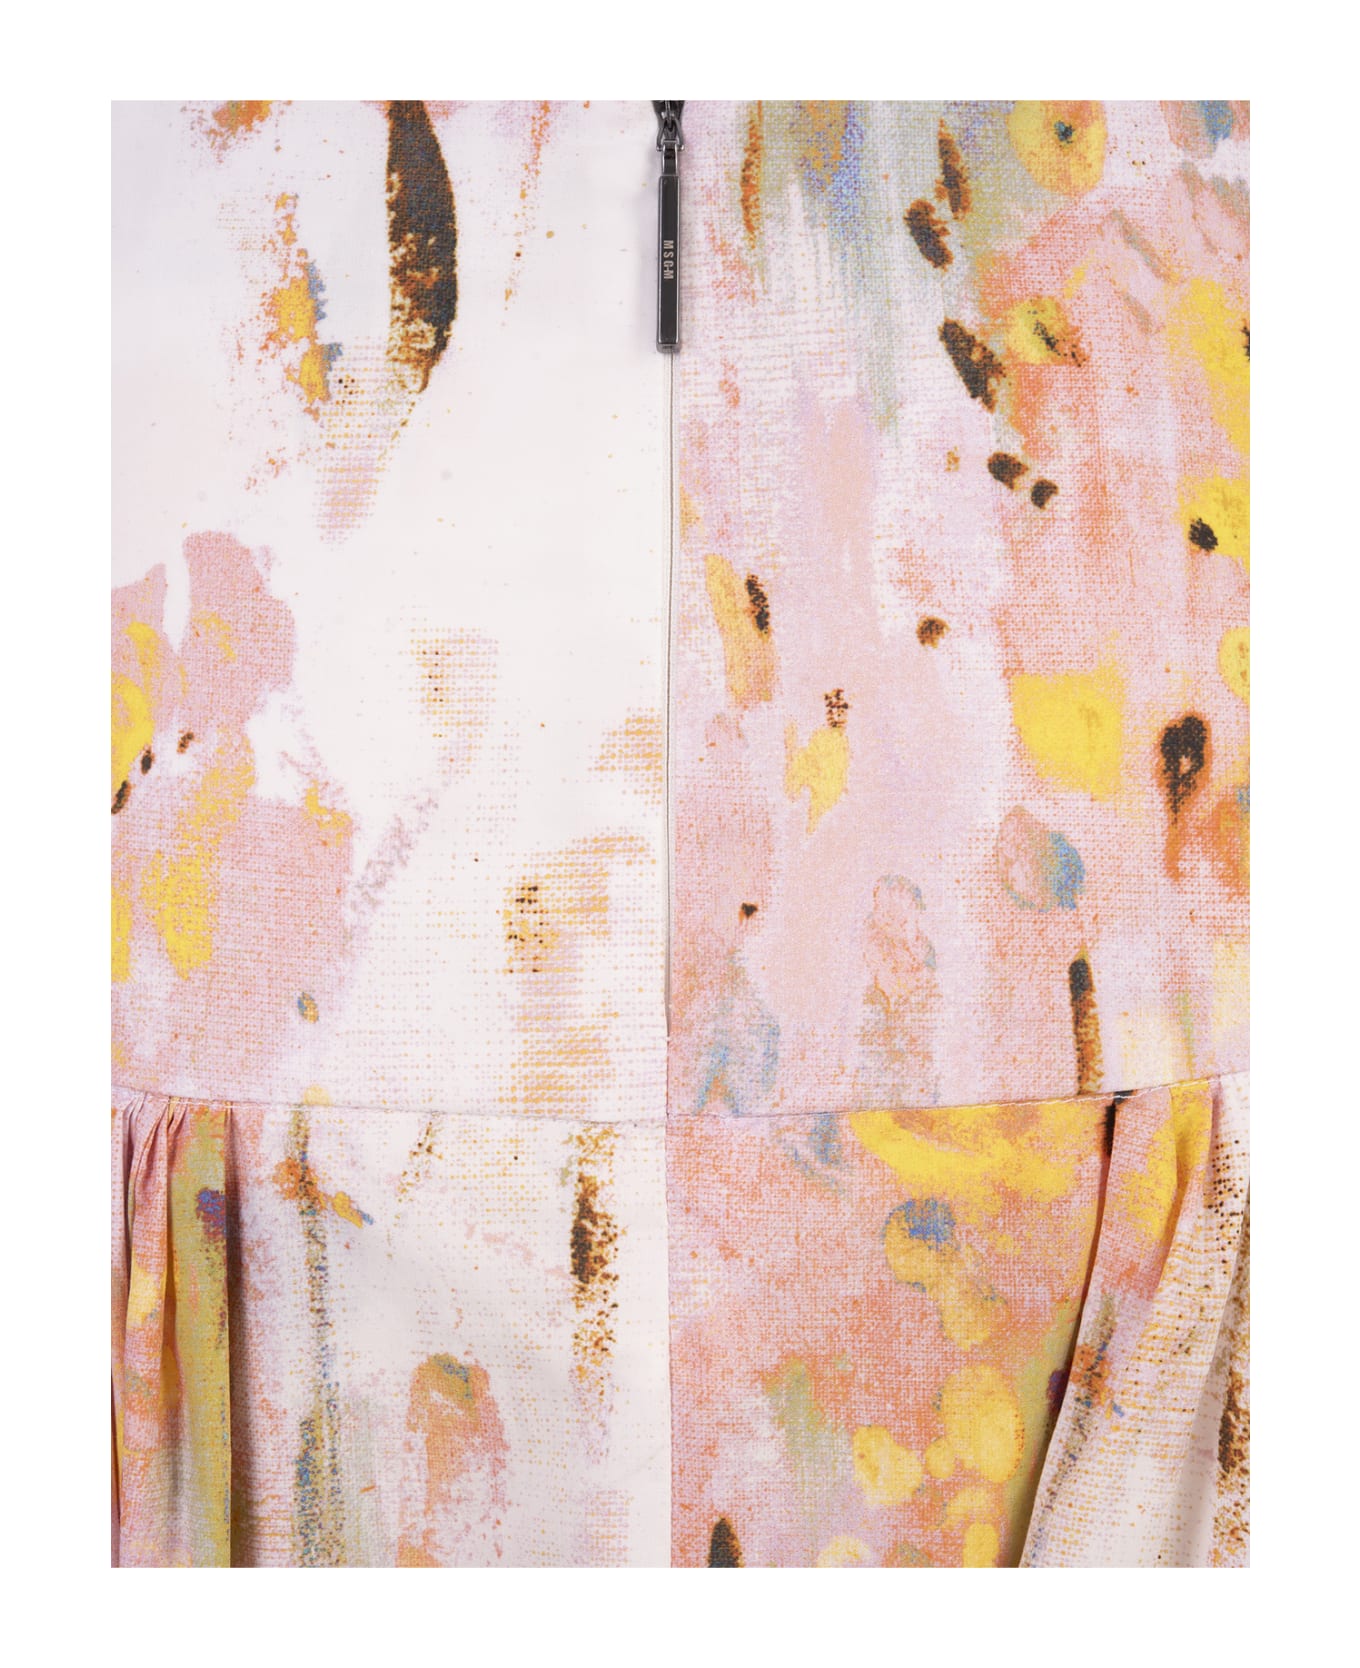 MSGM Flared Midi Skirt In Poplin With "artsy Flower" Print - Pink